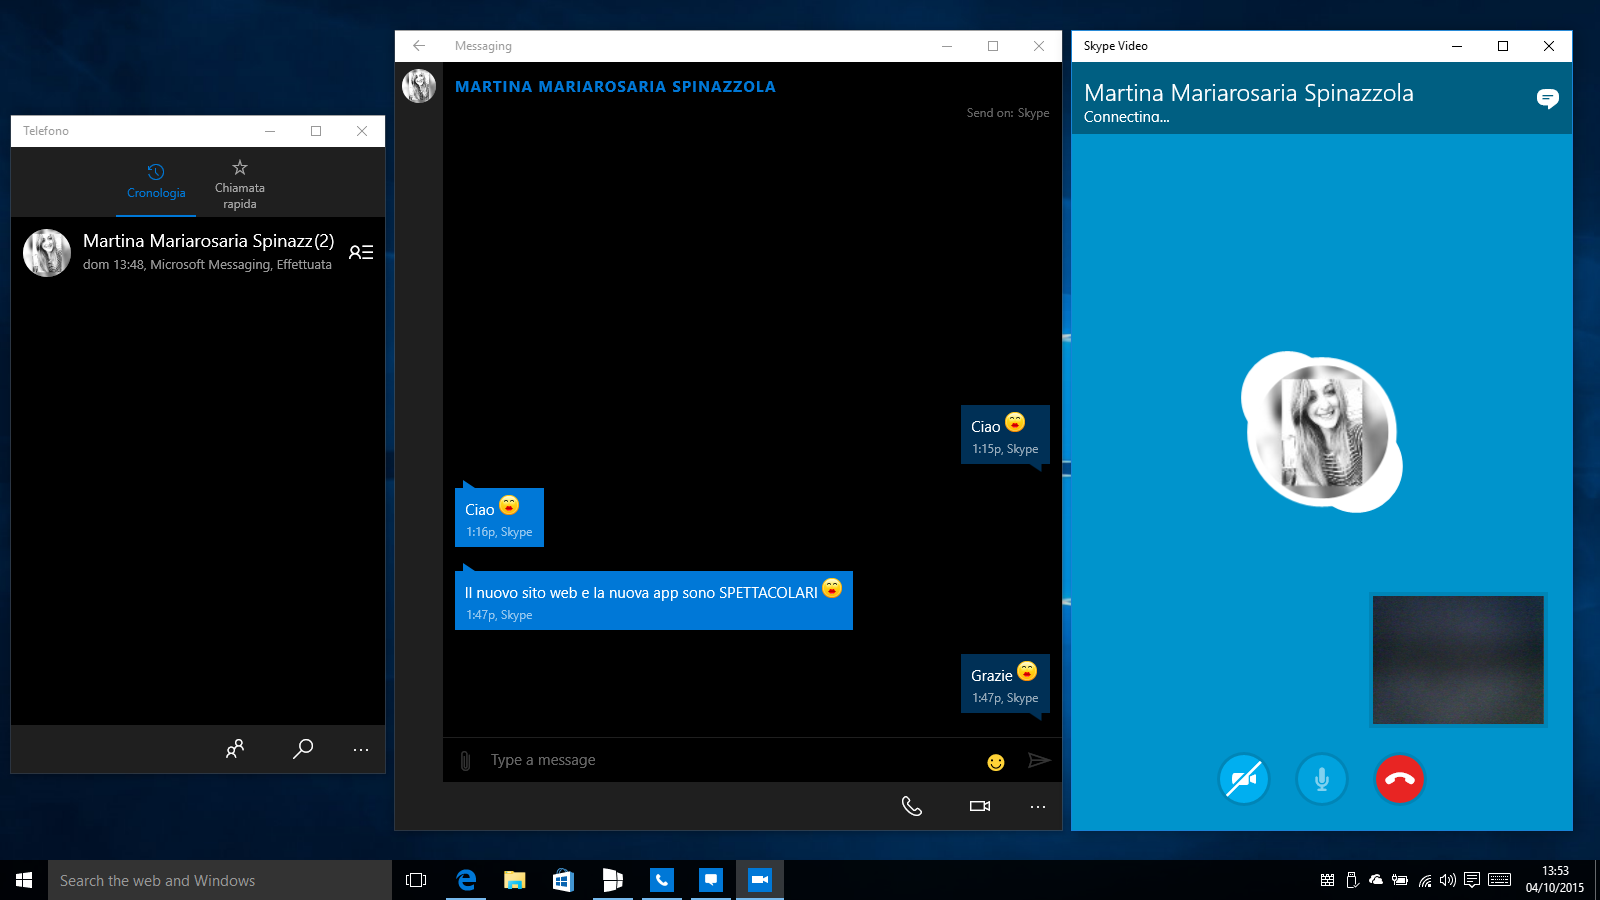 App Messaggi, Telefono e Skype video - Windows 10 10558